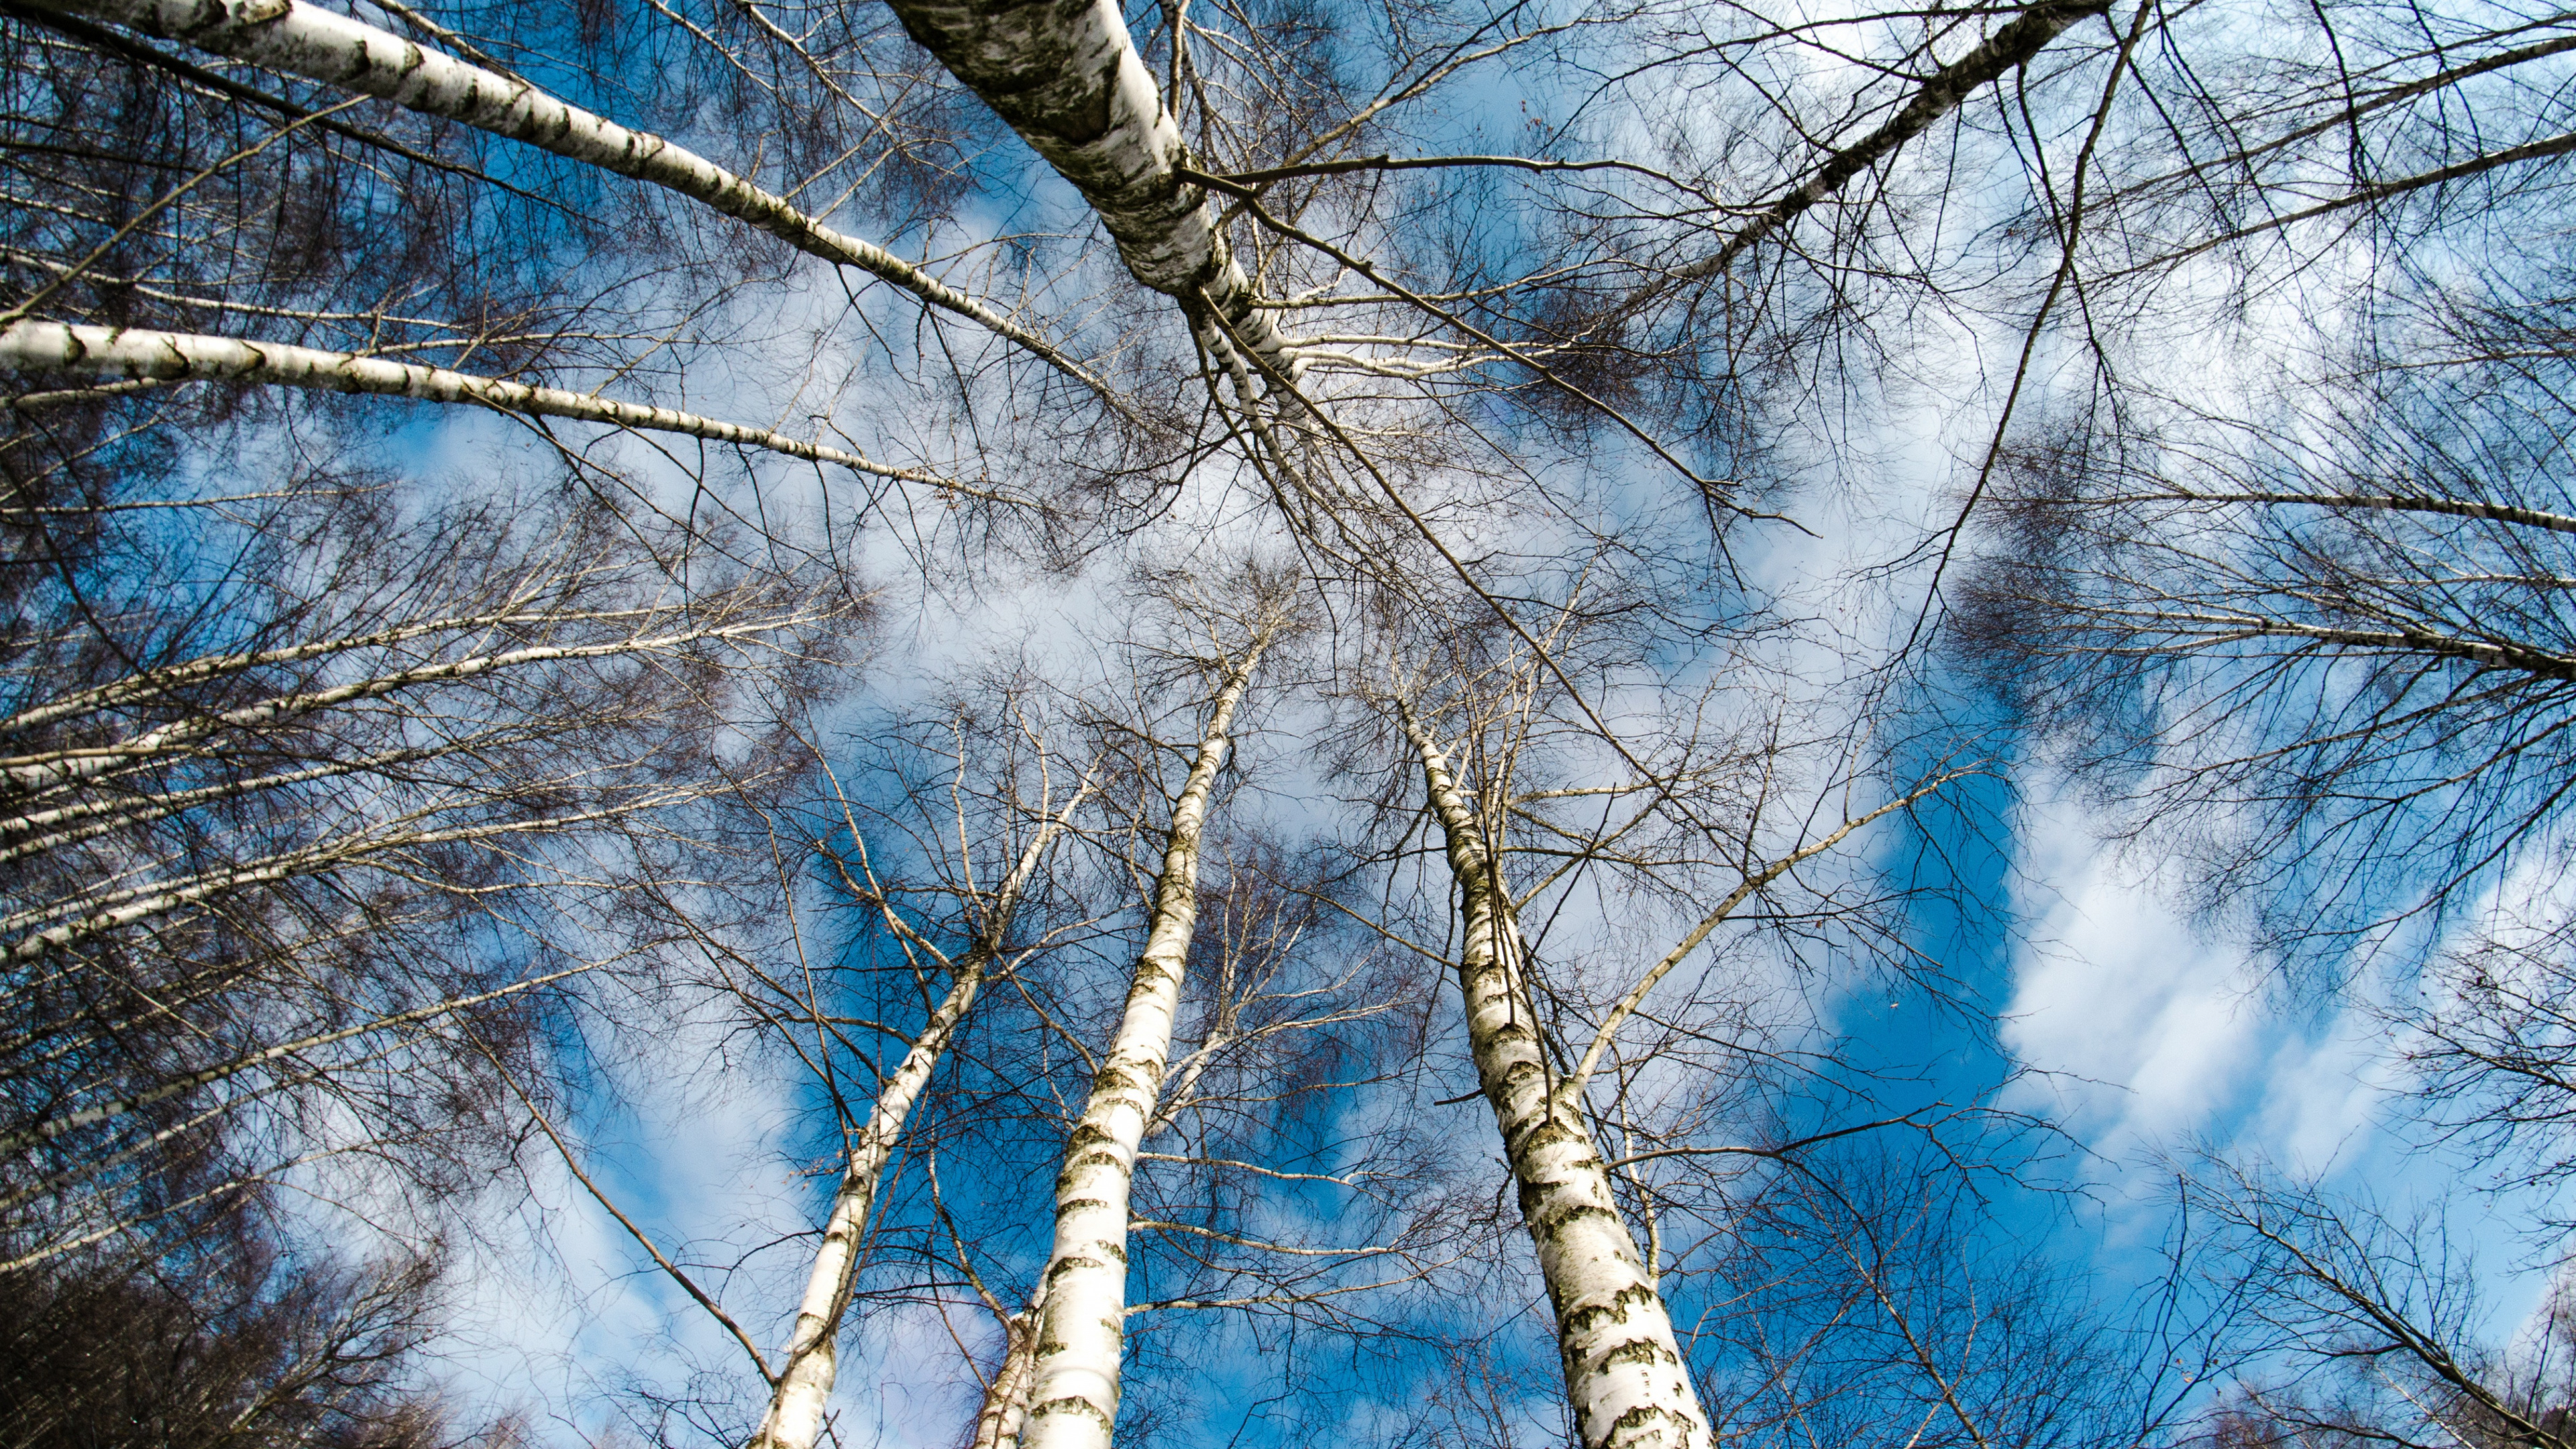 Birch, 木本植物, 天空, 林地, 冻结 壁纸 3840x2160 允许